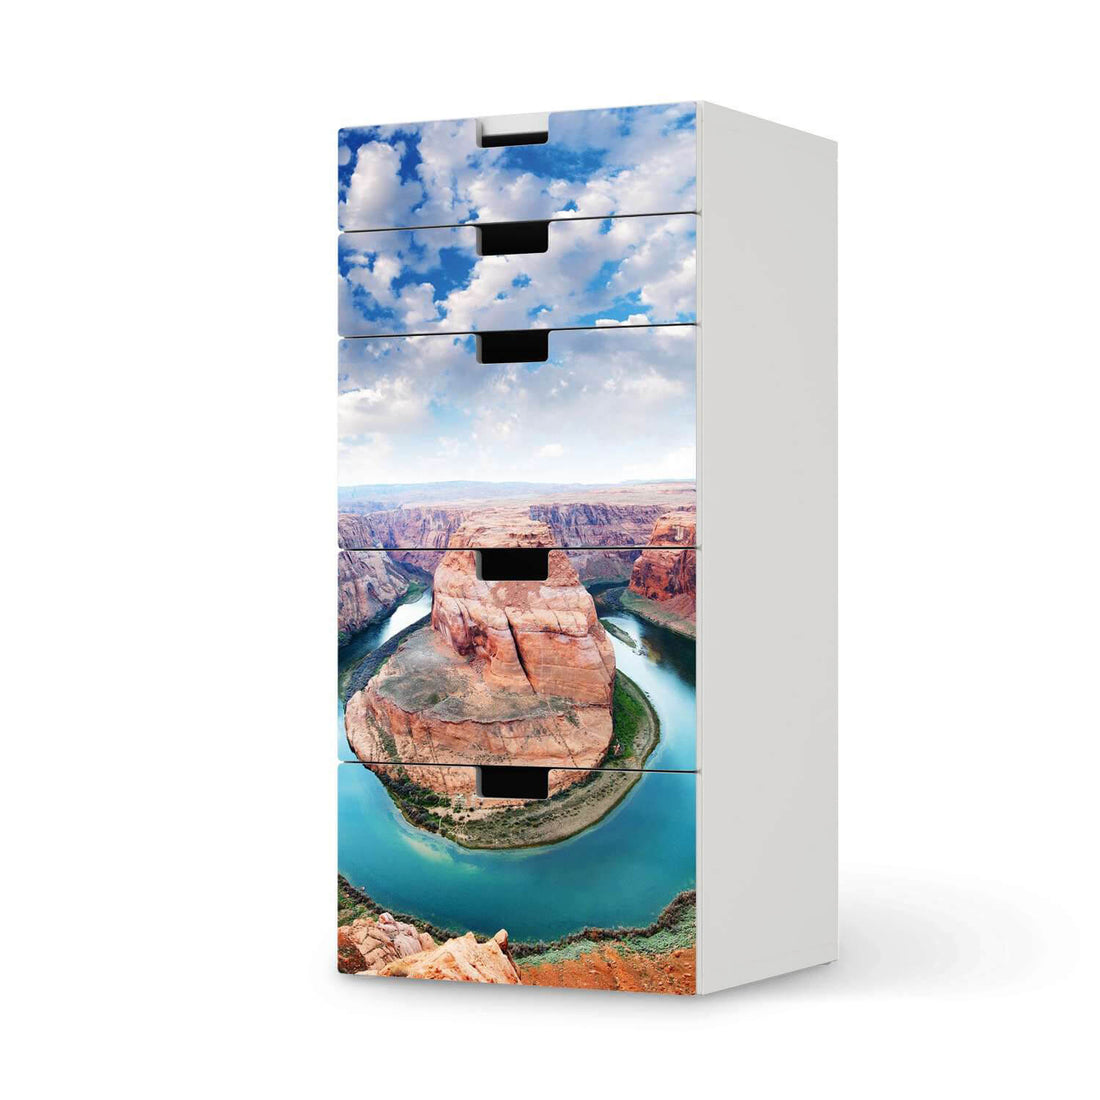 Möbel Klebefolie Grand Canyon - IKEA Stuva Kommode - 5 Schubladen  - weiss